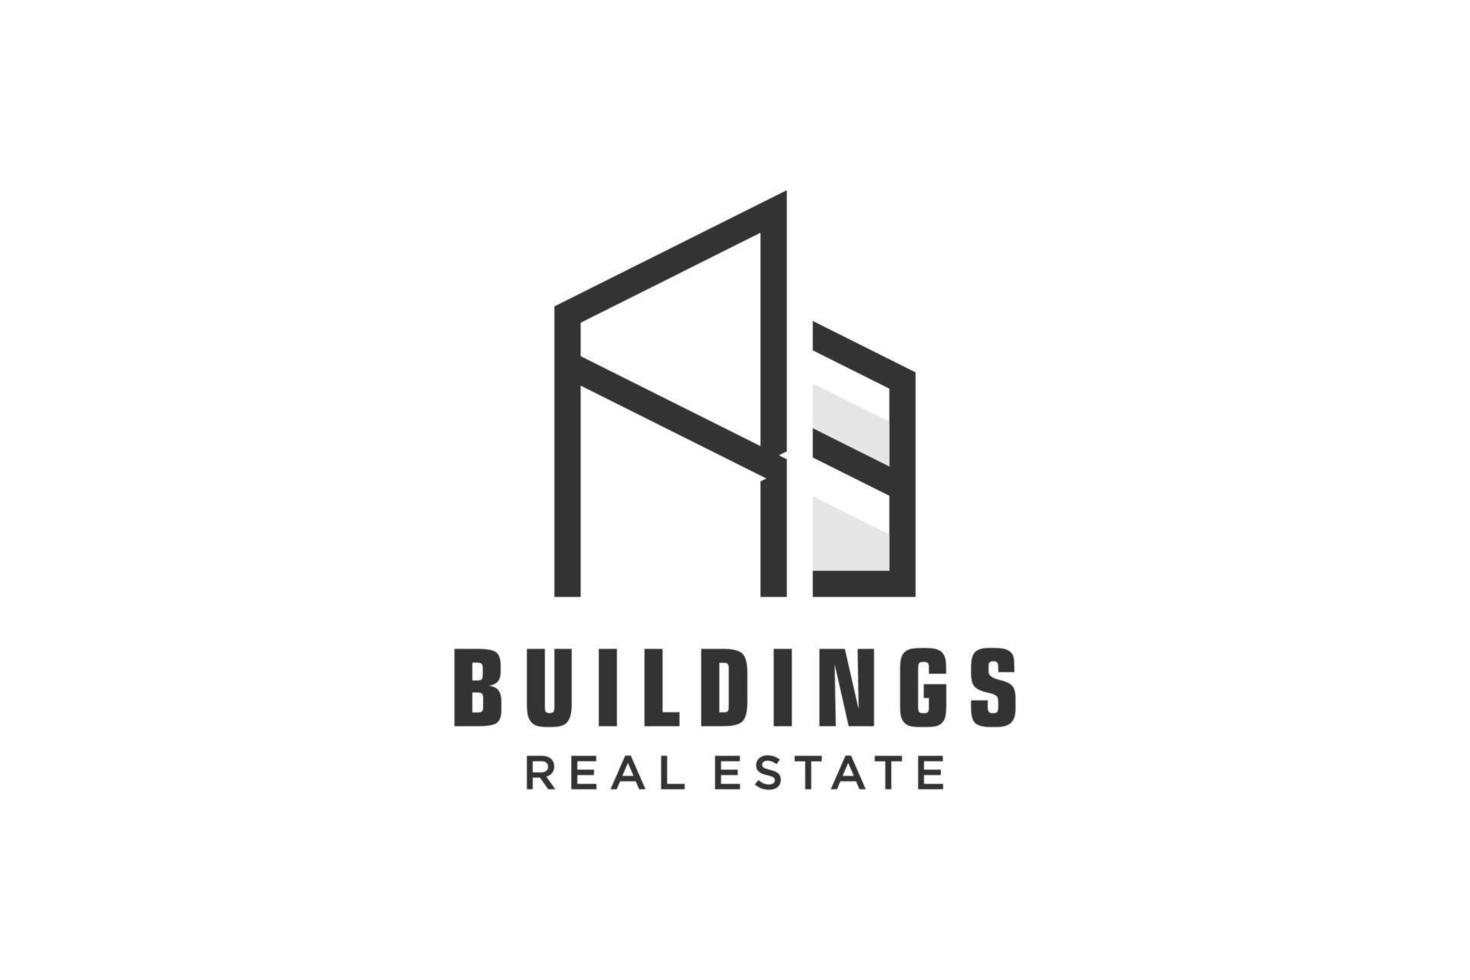 Letter R Simple modern building architecture logo design with line art skyscraper graphic vector